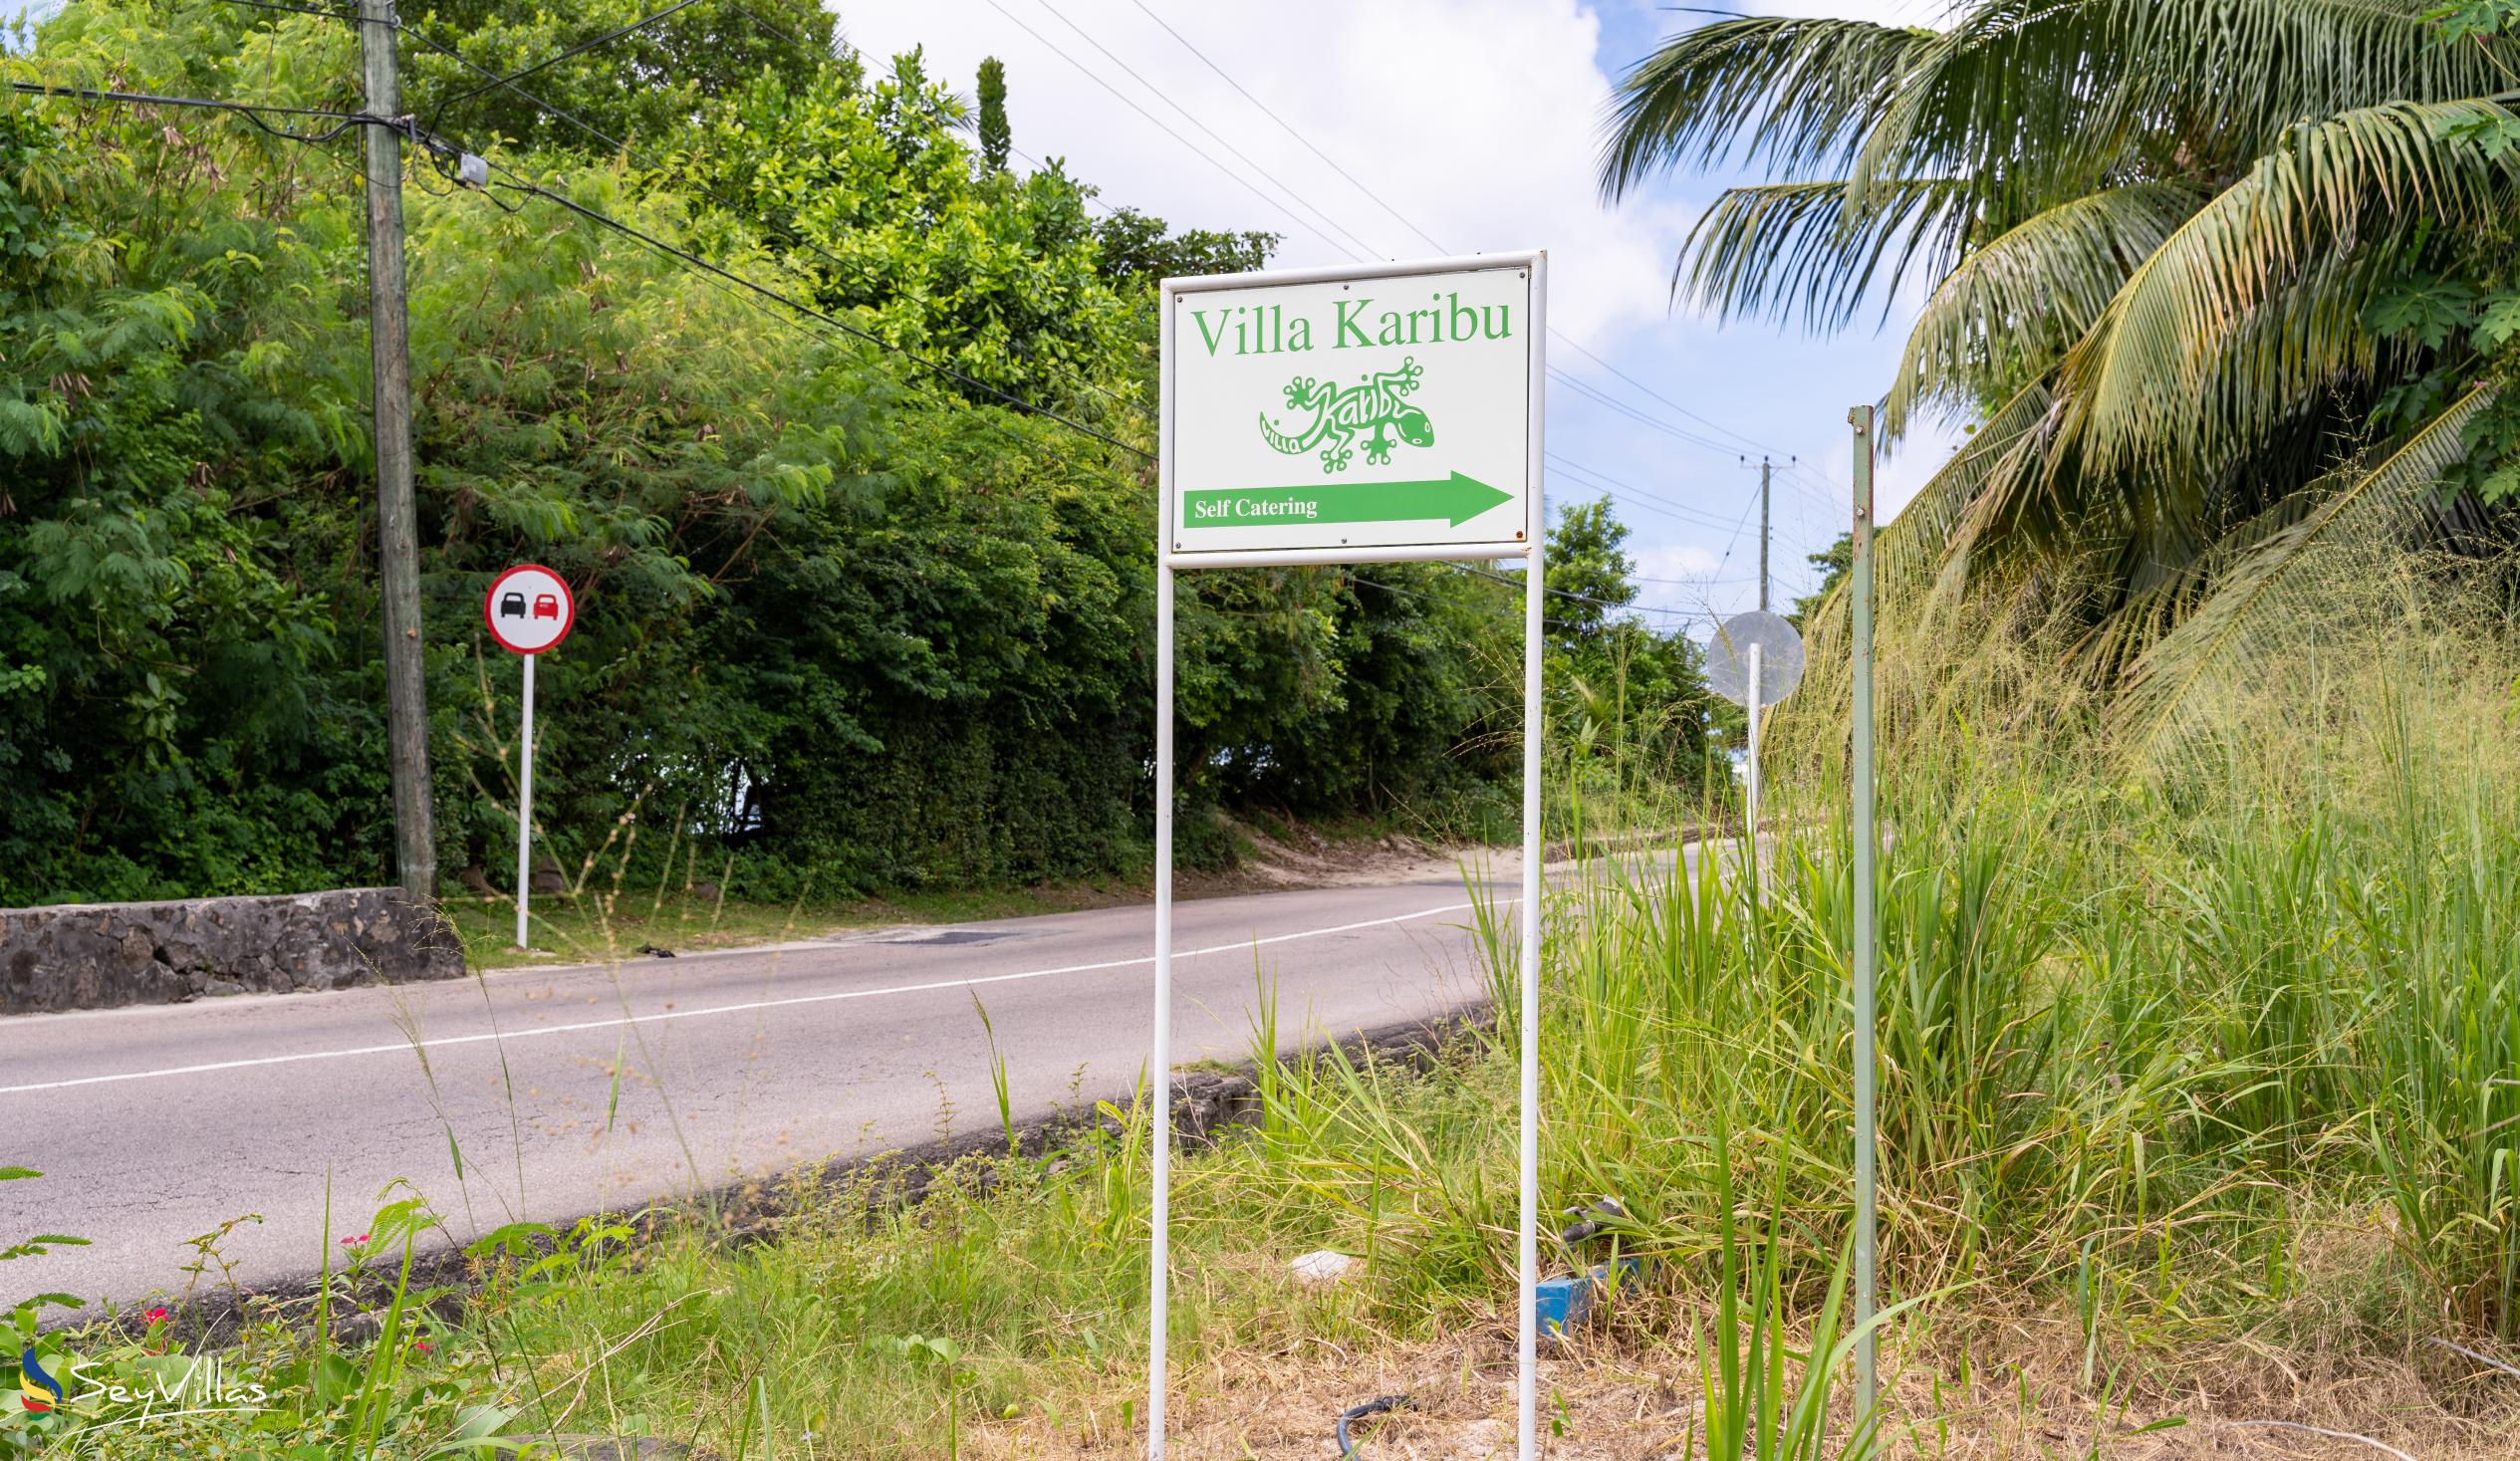 Foto 20: Villa Karibu - Location - Mahé (Seychelles)